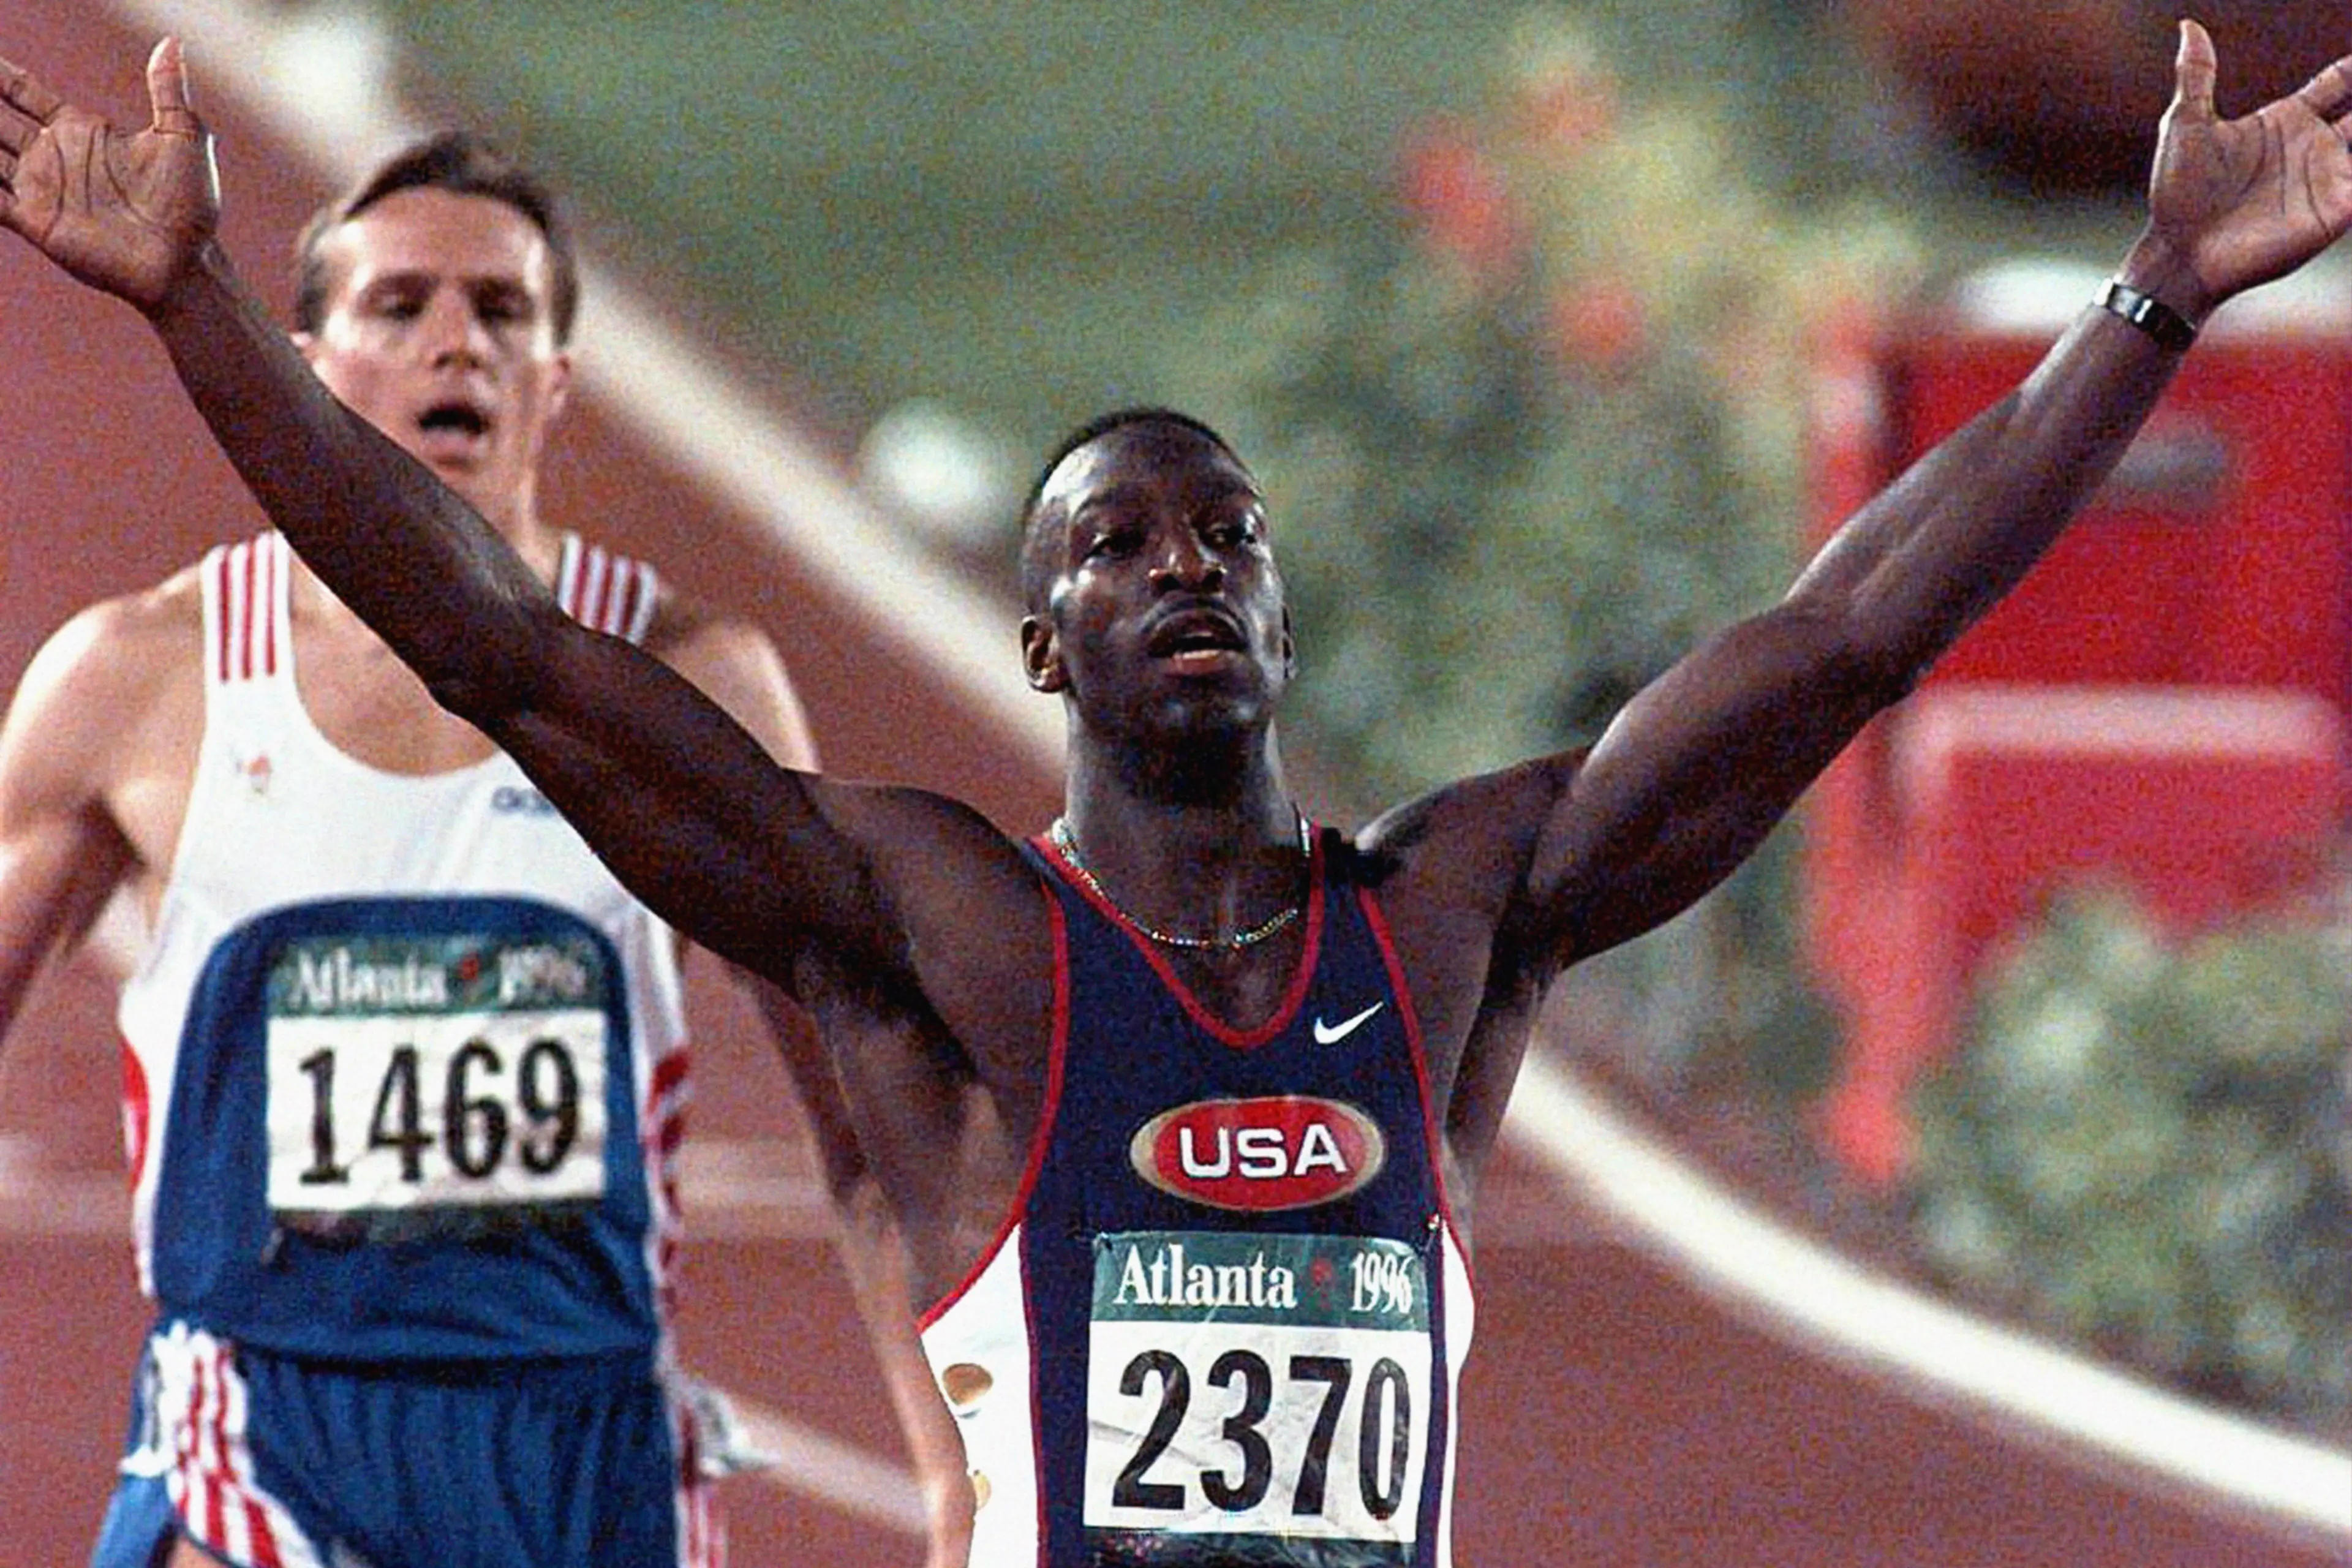 Michael Johnson celebrating his win at the 1996 Olympics. (